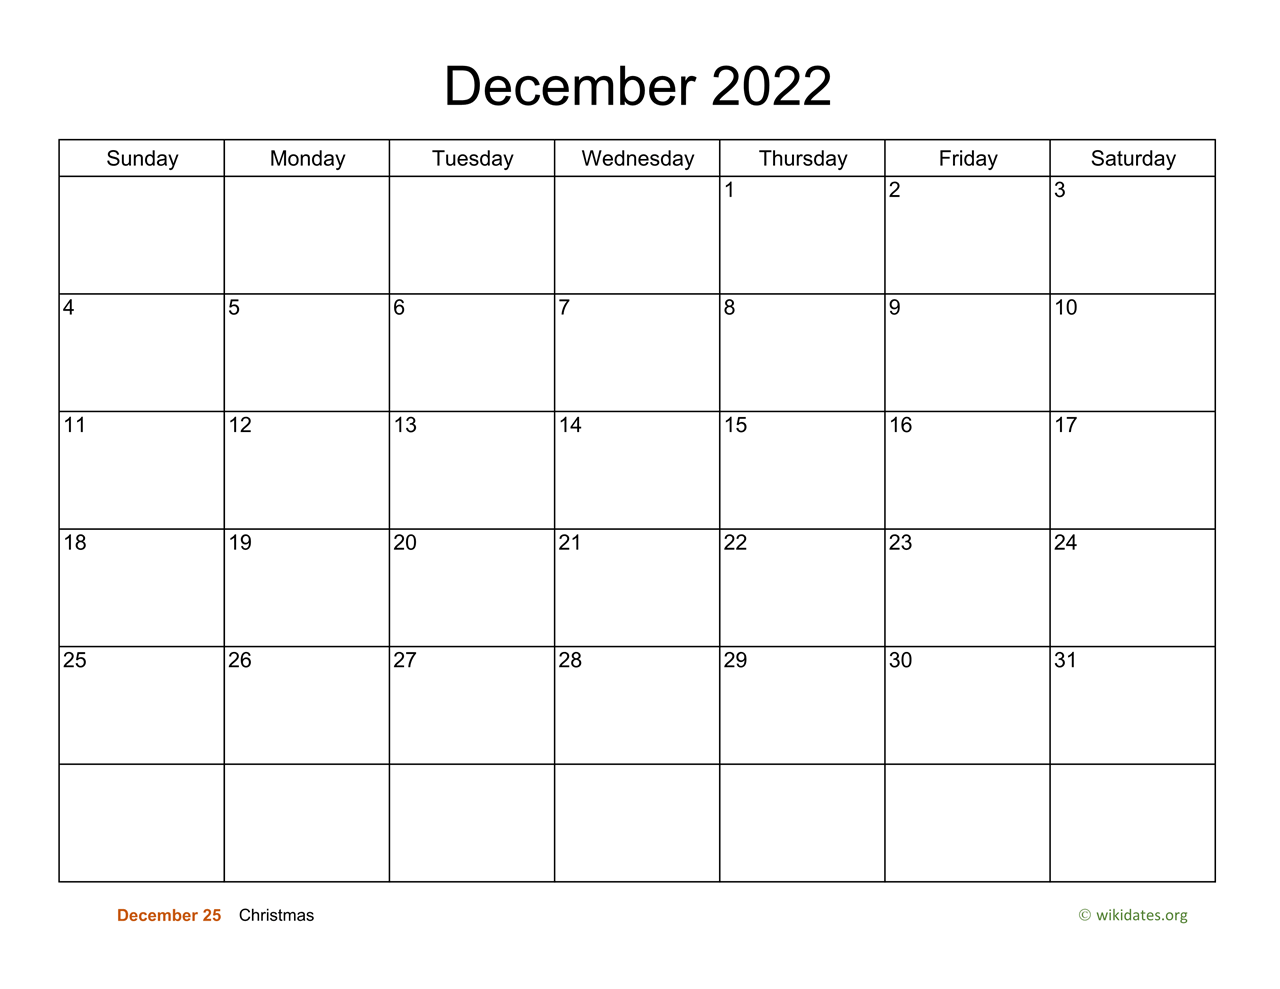 Monthly Calendar December 2022 Basic Calendar For December 2022 | Wikidates.org